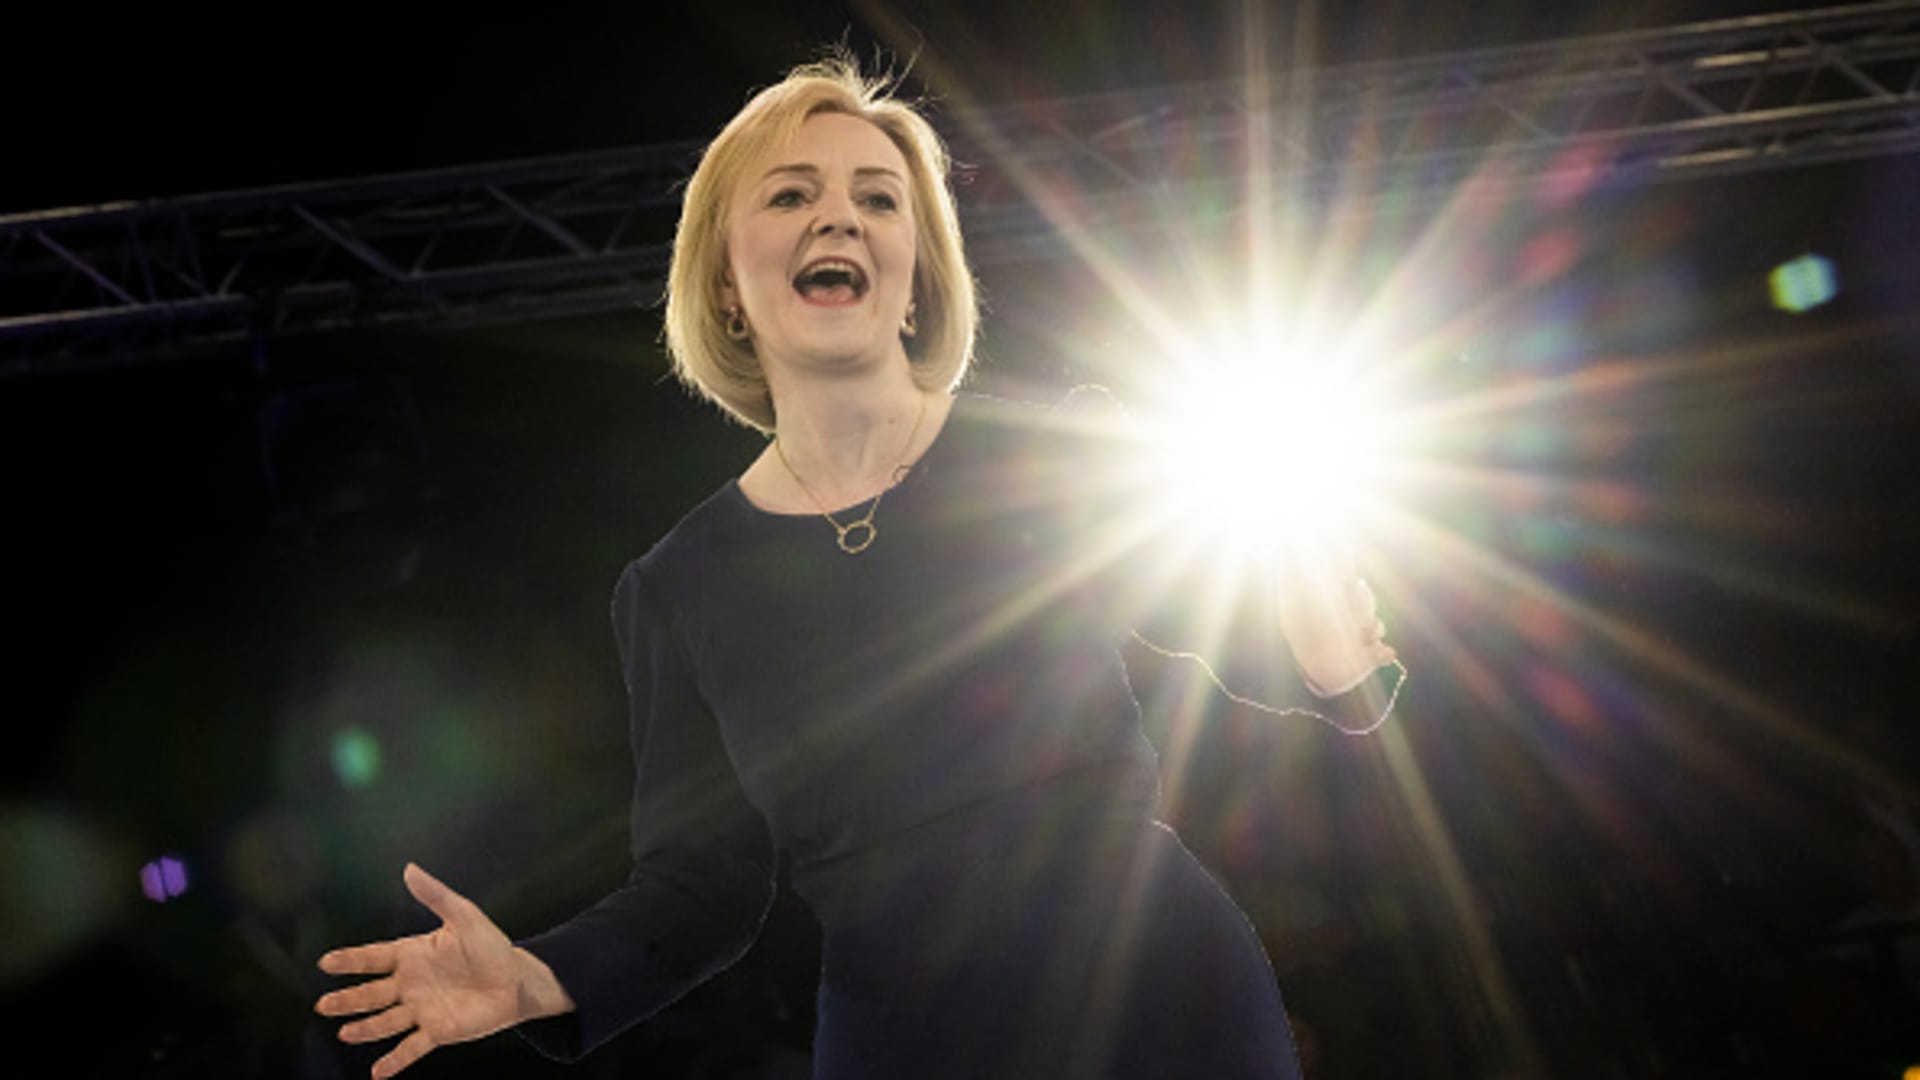 Liz Truss to become Britain’s next prime minister replacing Boris Johnson – CNBC